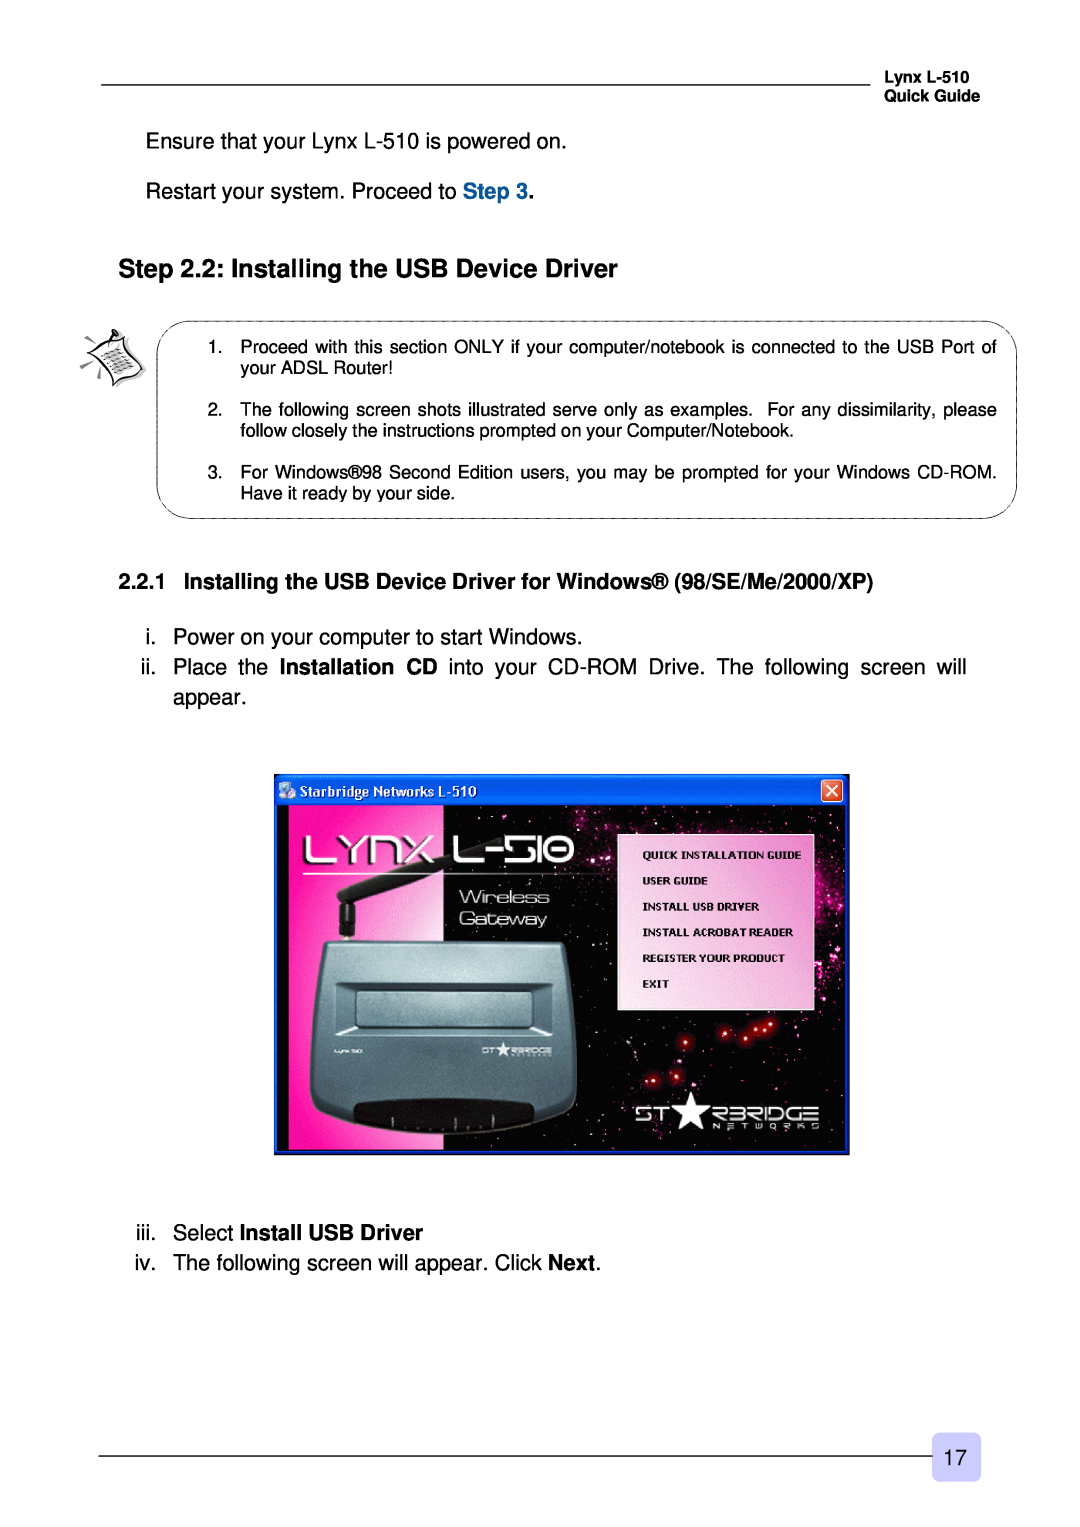 3Com Lynx L-510 warranty 2 Installing the USB Device Driver, Installing the USB Device Driver for Windows 98/SE/Me/2000/XP 